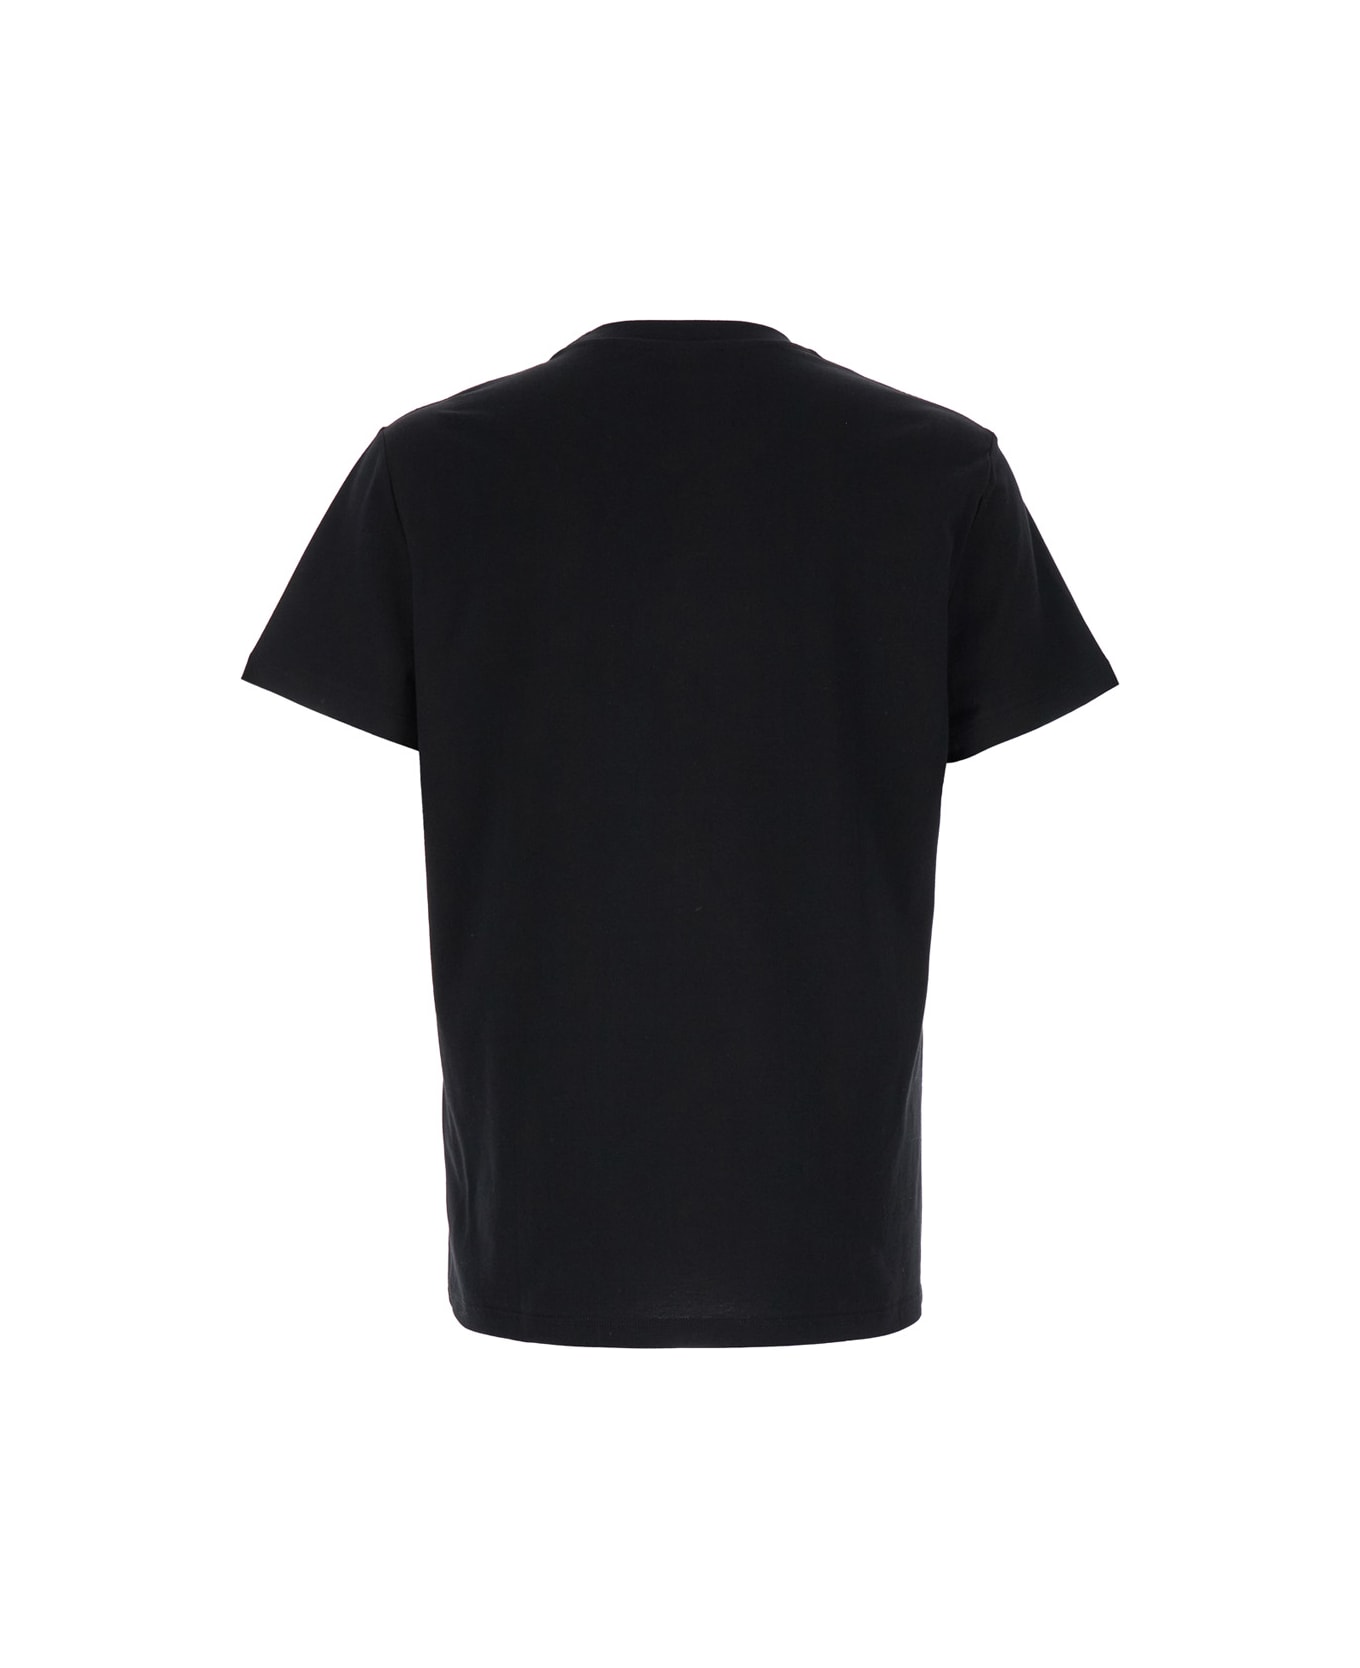 Balmain Silver Balmain Vintage T-shirt - Classic Fit - Black